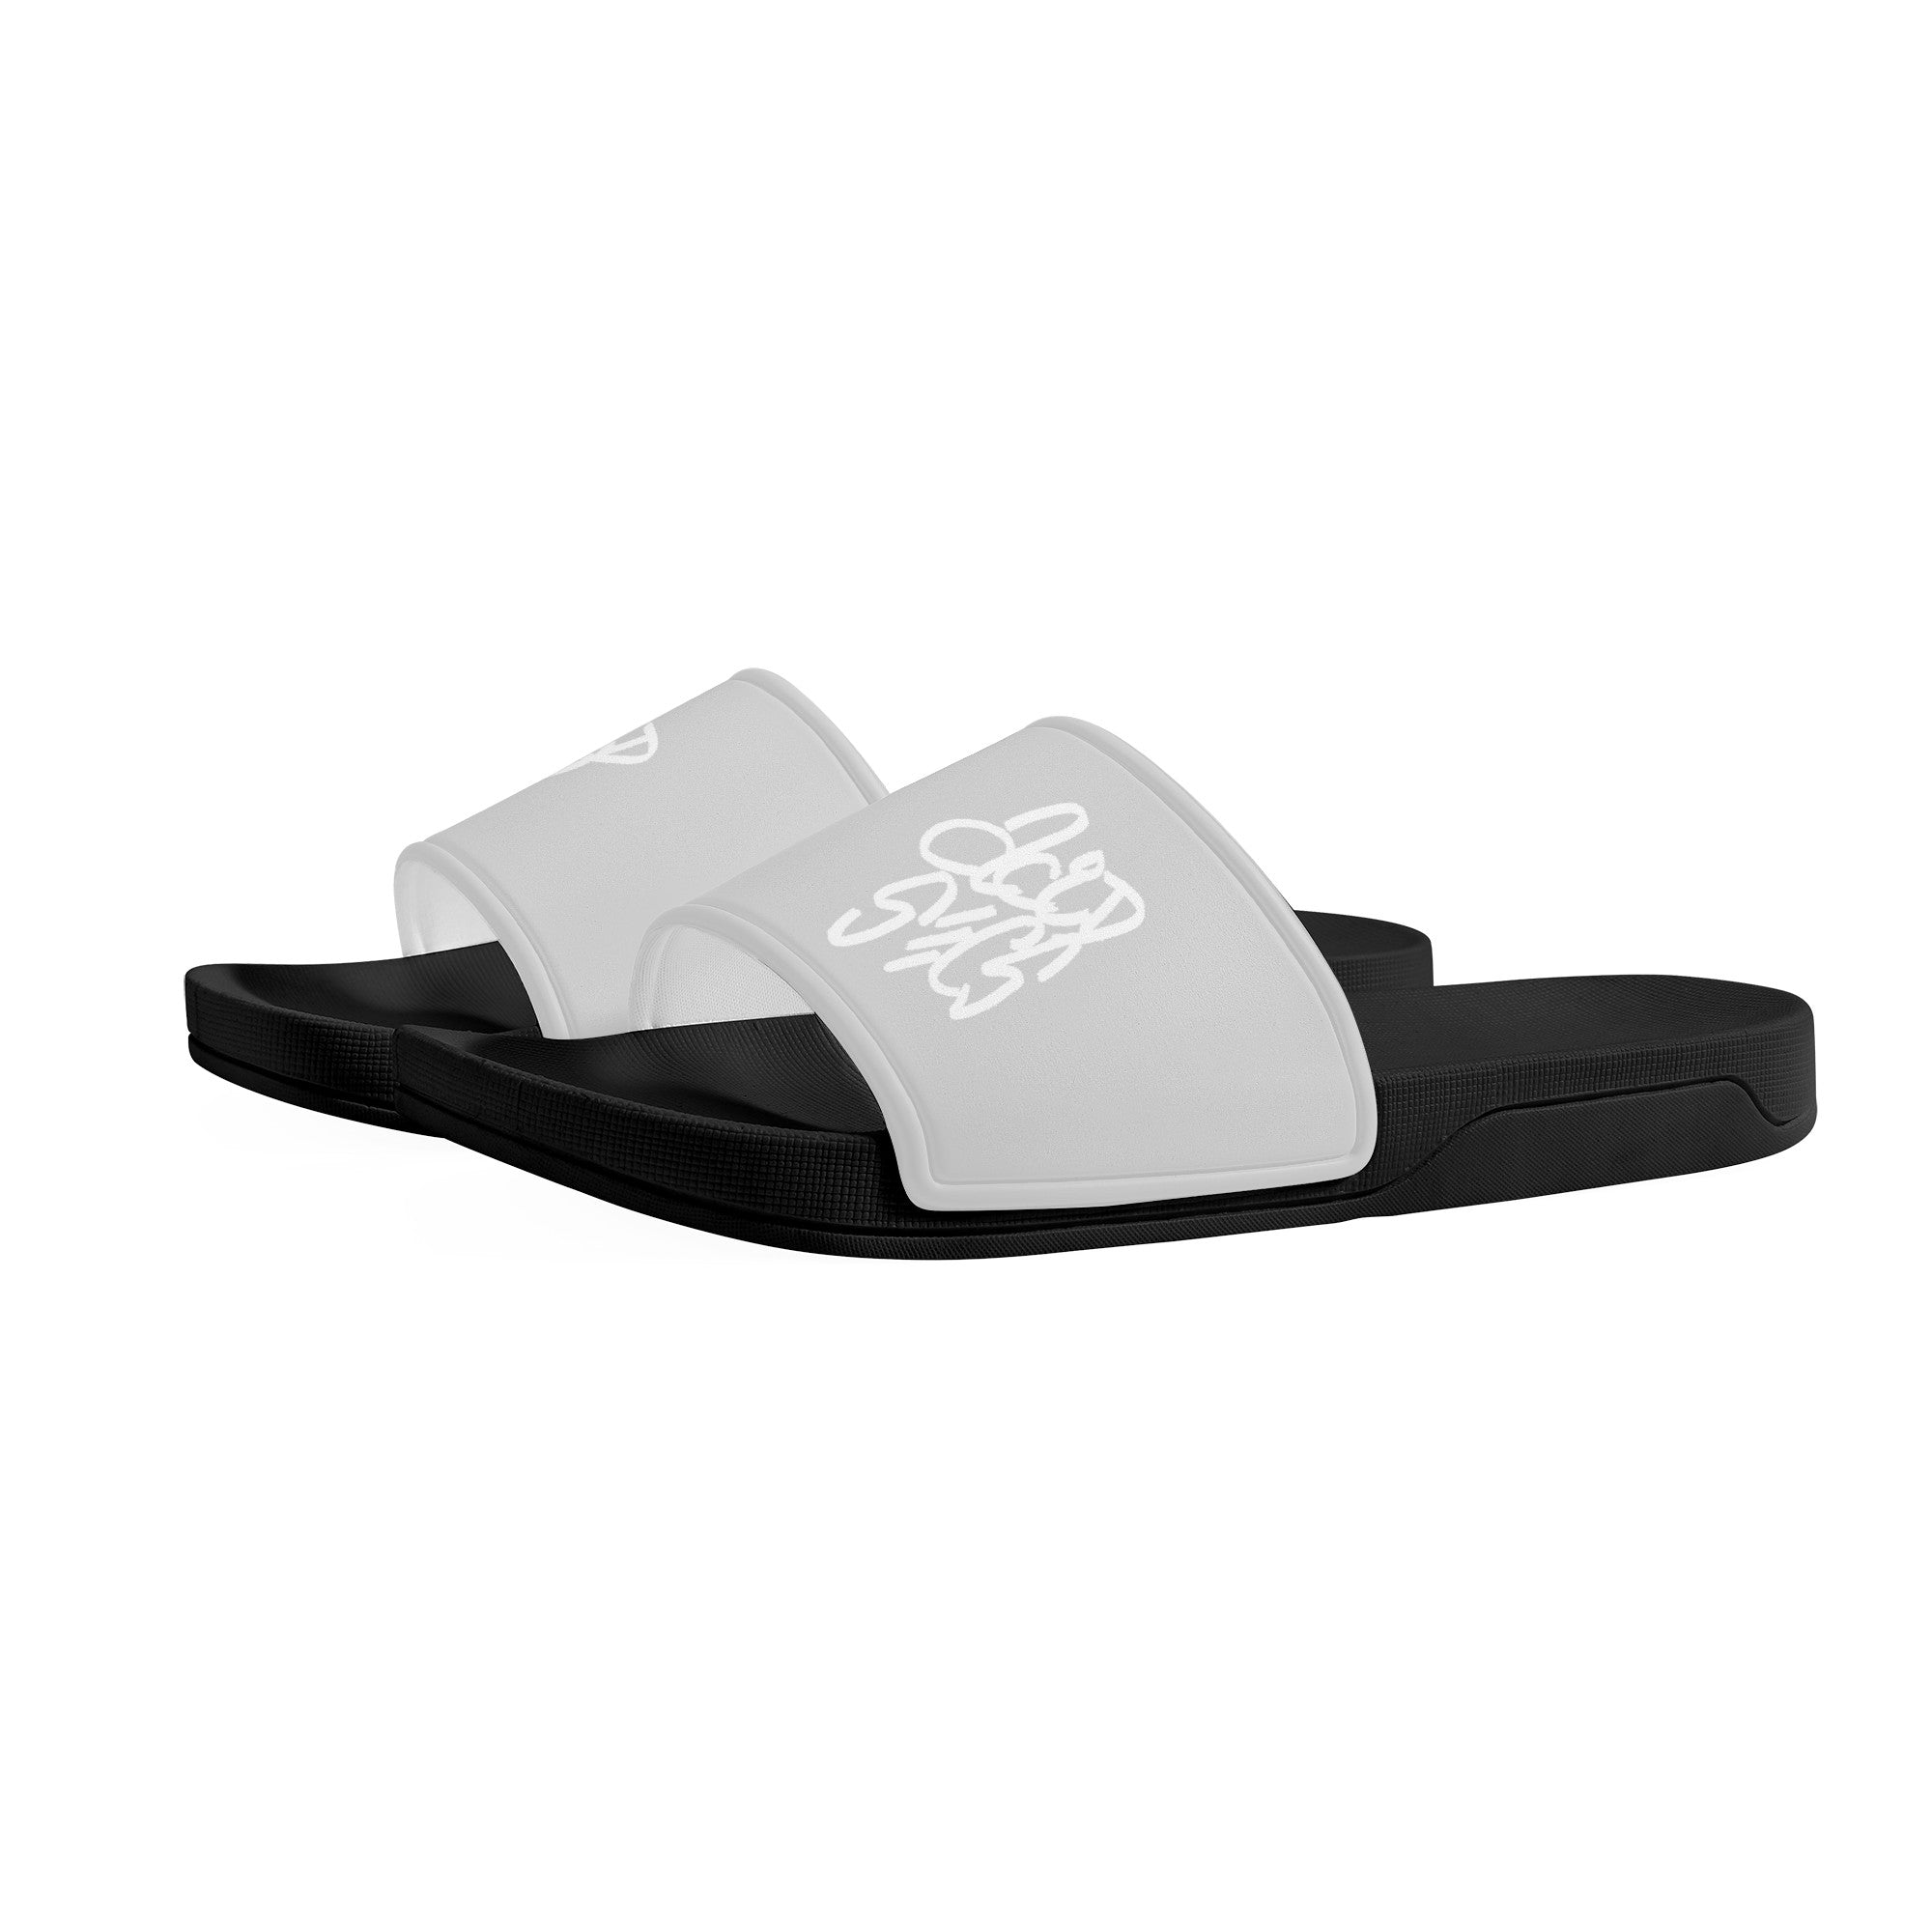 Acid Secs Slide Sandals - Light Grey